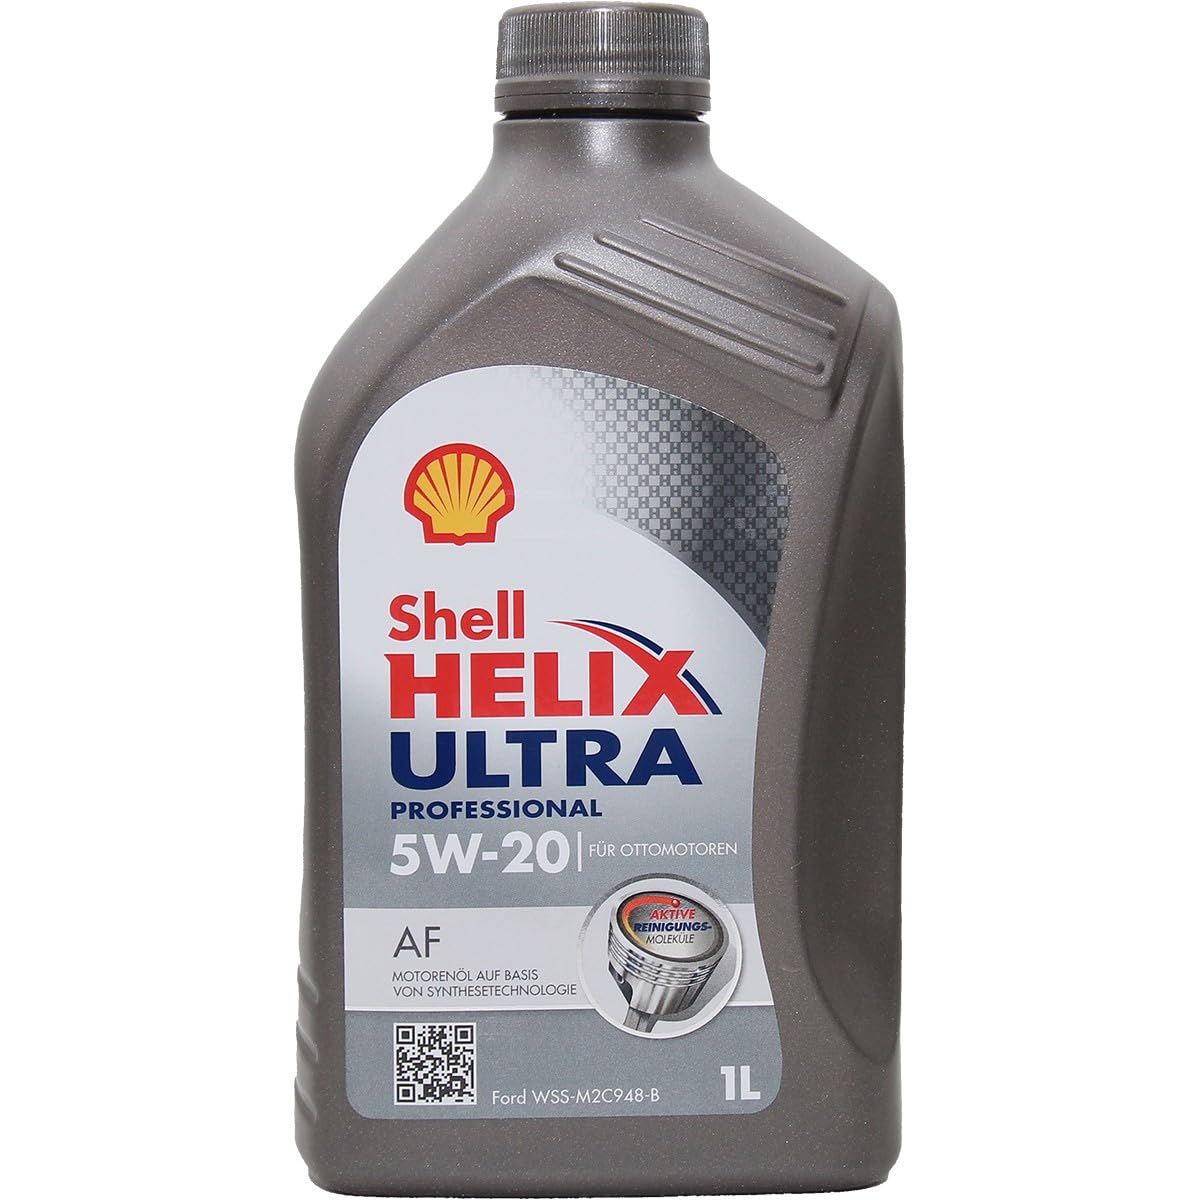 Shell Helix Ultra Professiona AF 5W-20, 1 Liter von Shell